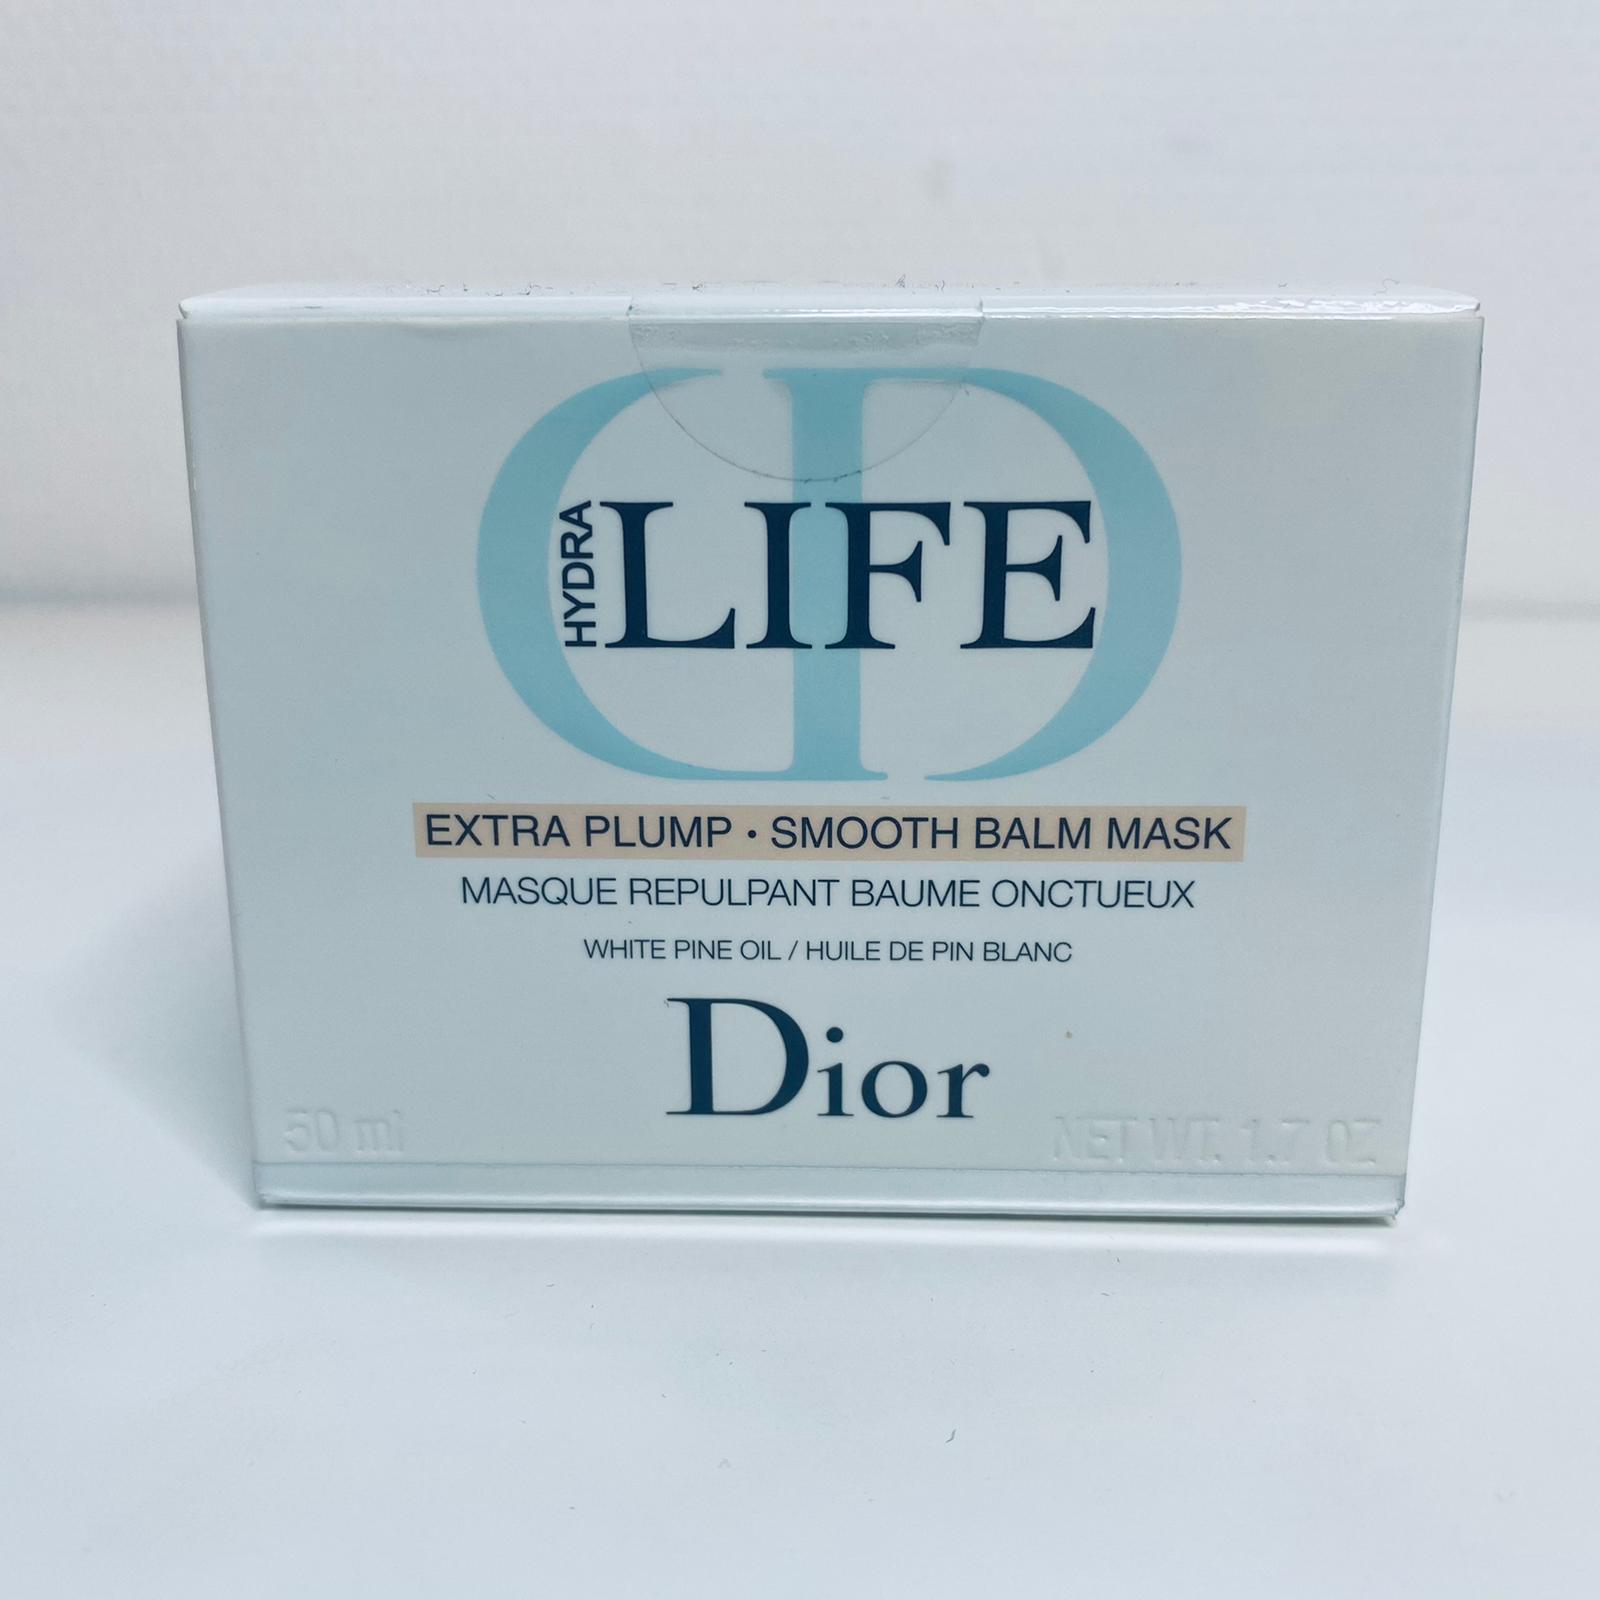 Dior hydra life extra plump smooth balm mask 50 ml